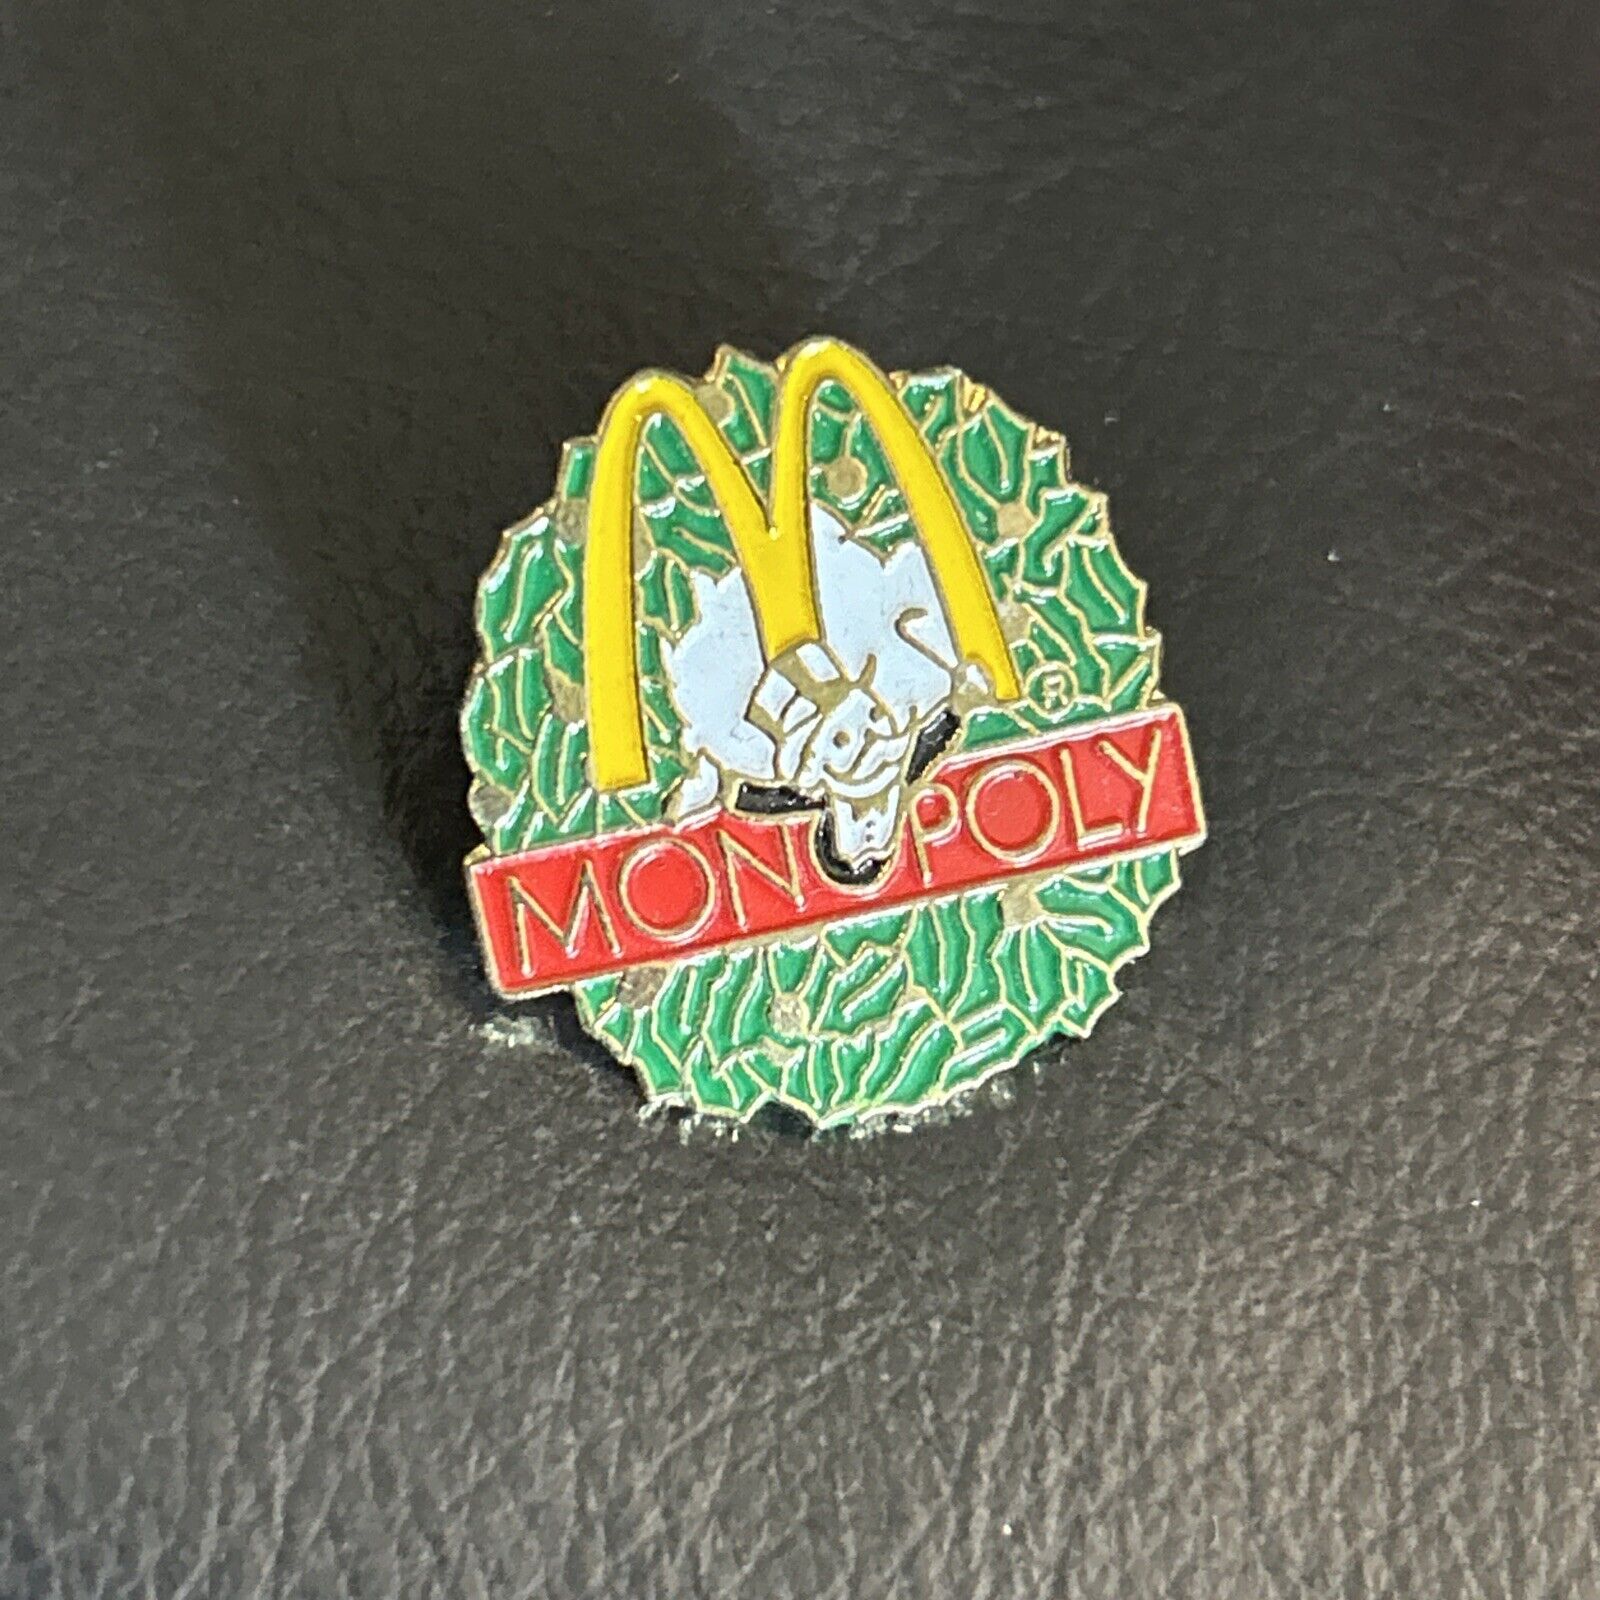 Vintage 1995 McDonalds Monopoly Wreath Enamel Lapel Pin Single Clutch Back